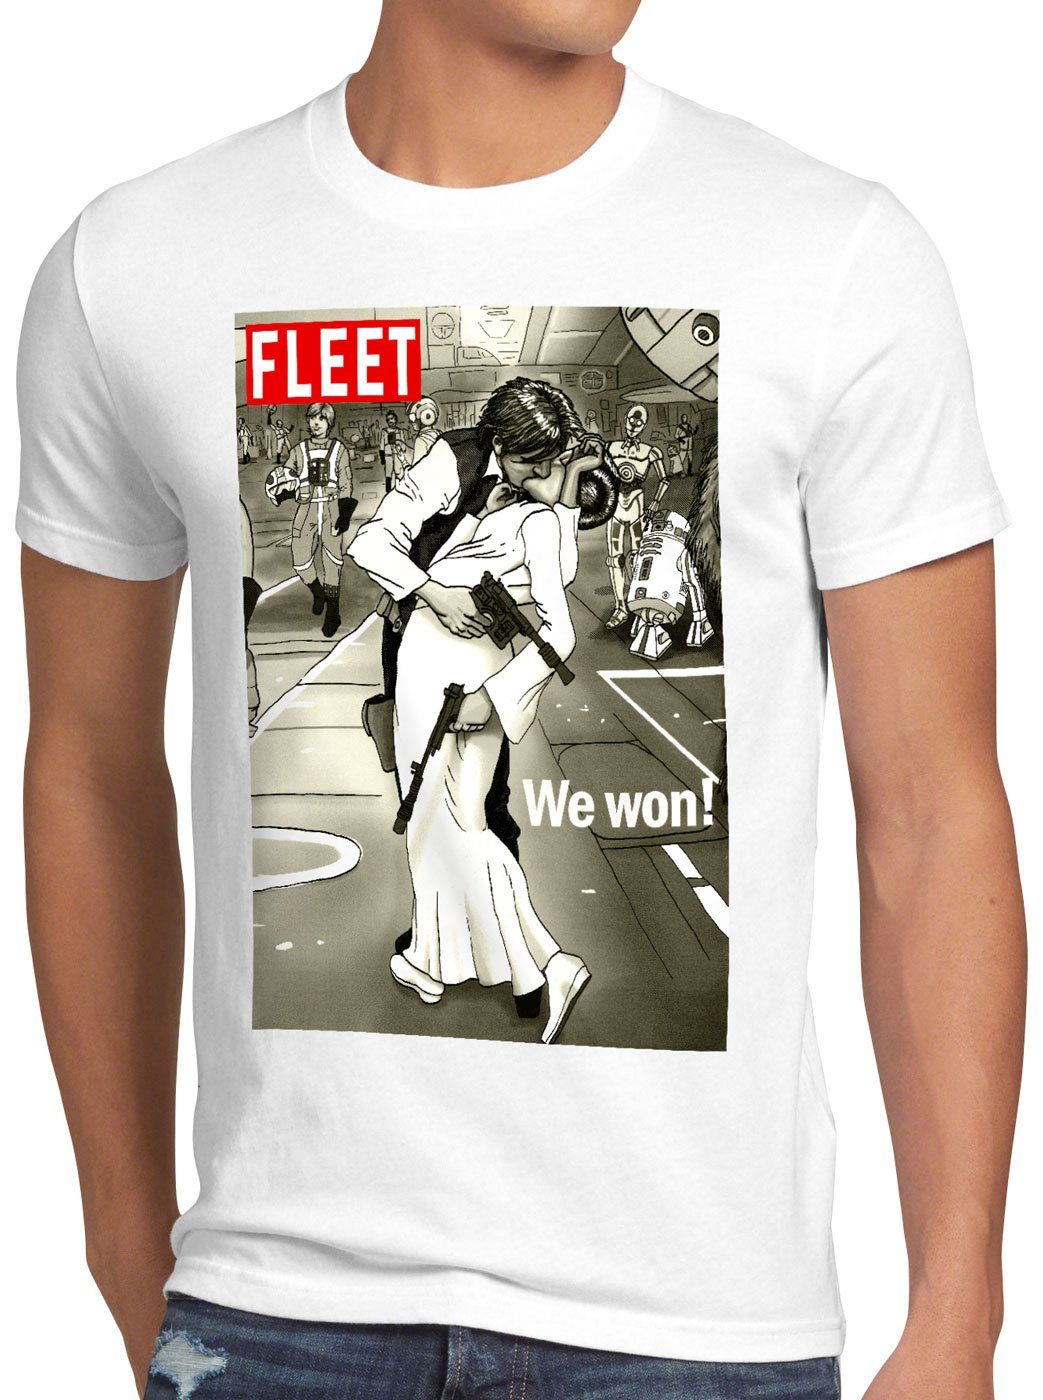 Print-Shirt han weiß rebellen style3 T-Shirt We won leia kiss Herren vintage allianz